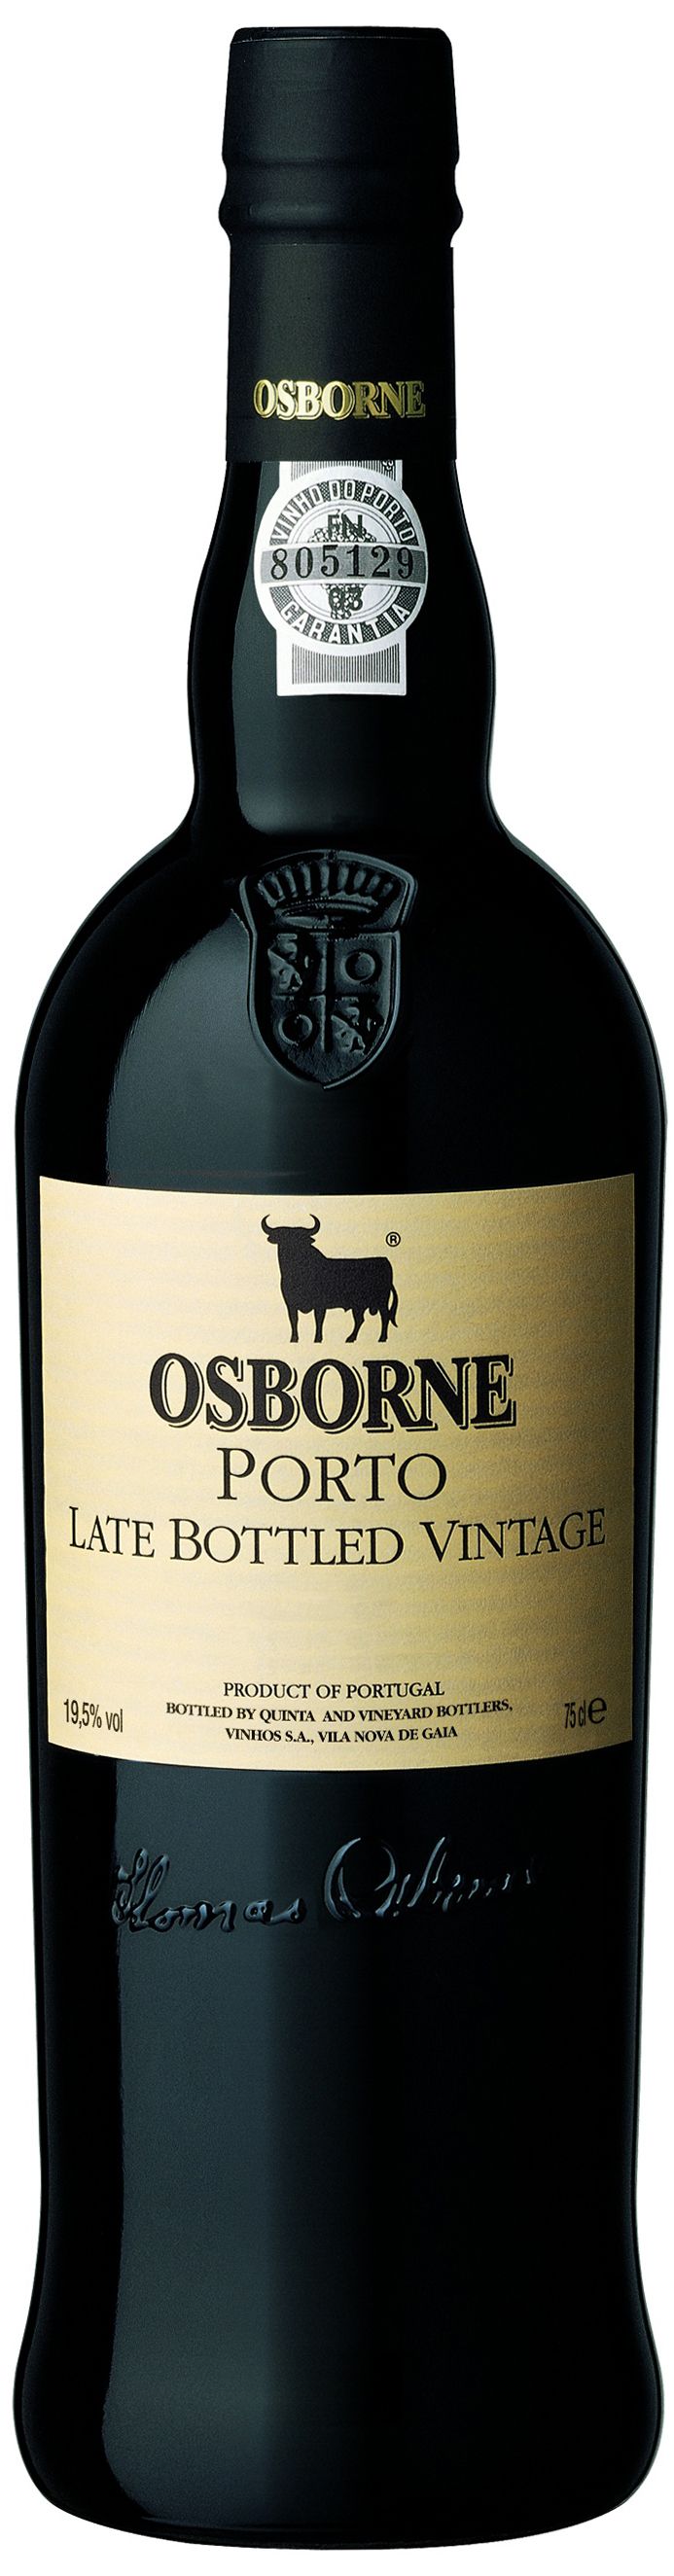 Quinta And Vineyard, Osborne Porto Late Bottled Vintage, 2005